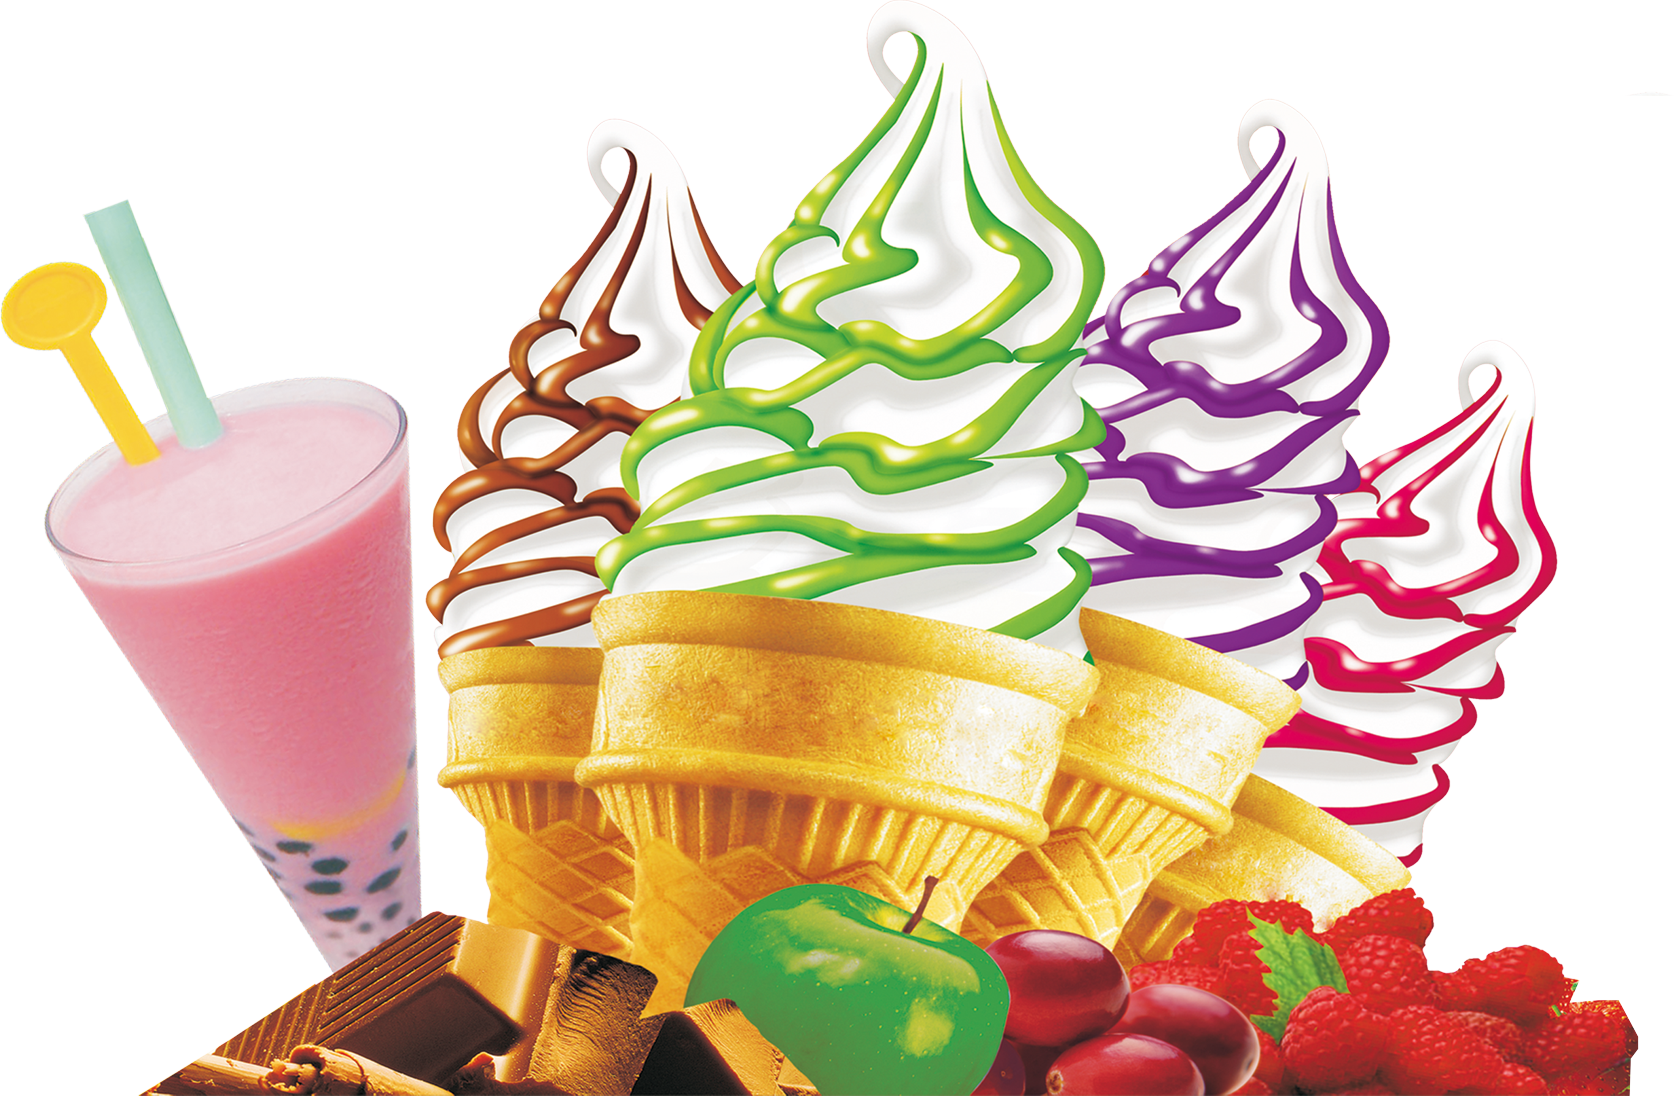 Ice cream cone frozen. Yogurt clipart yogurt drink